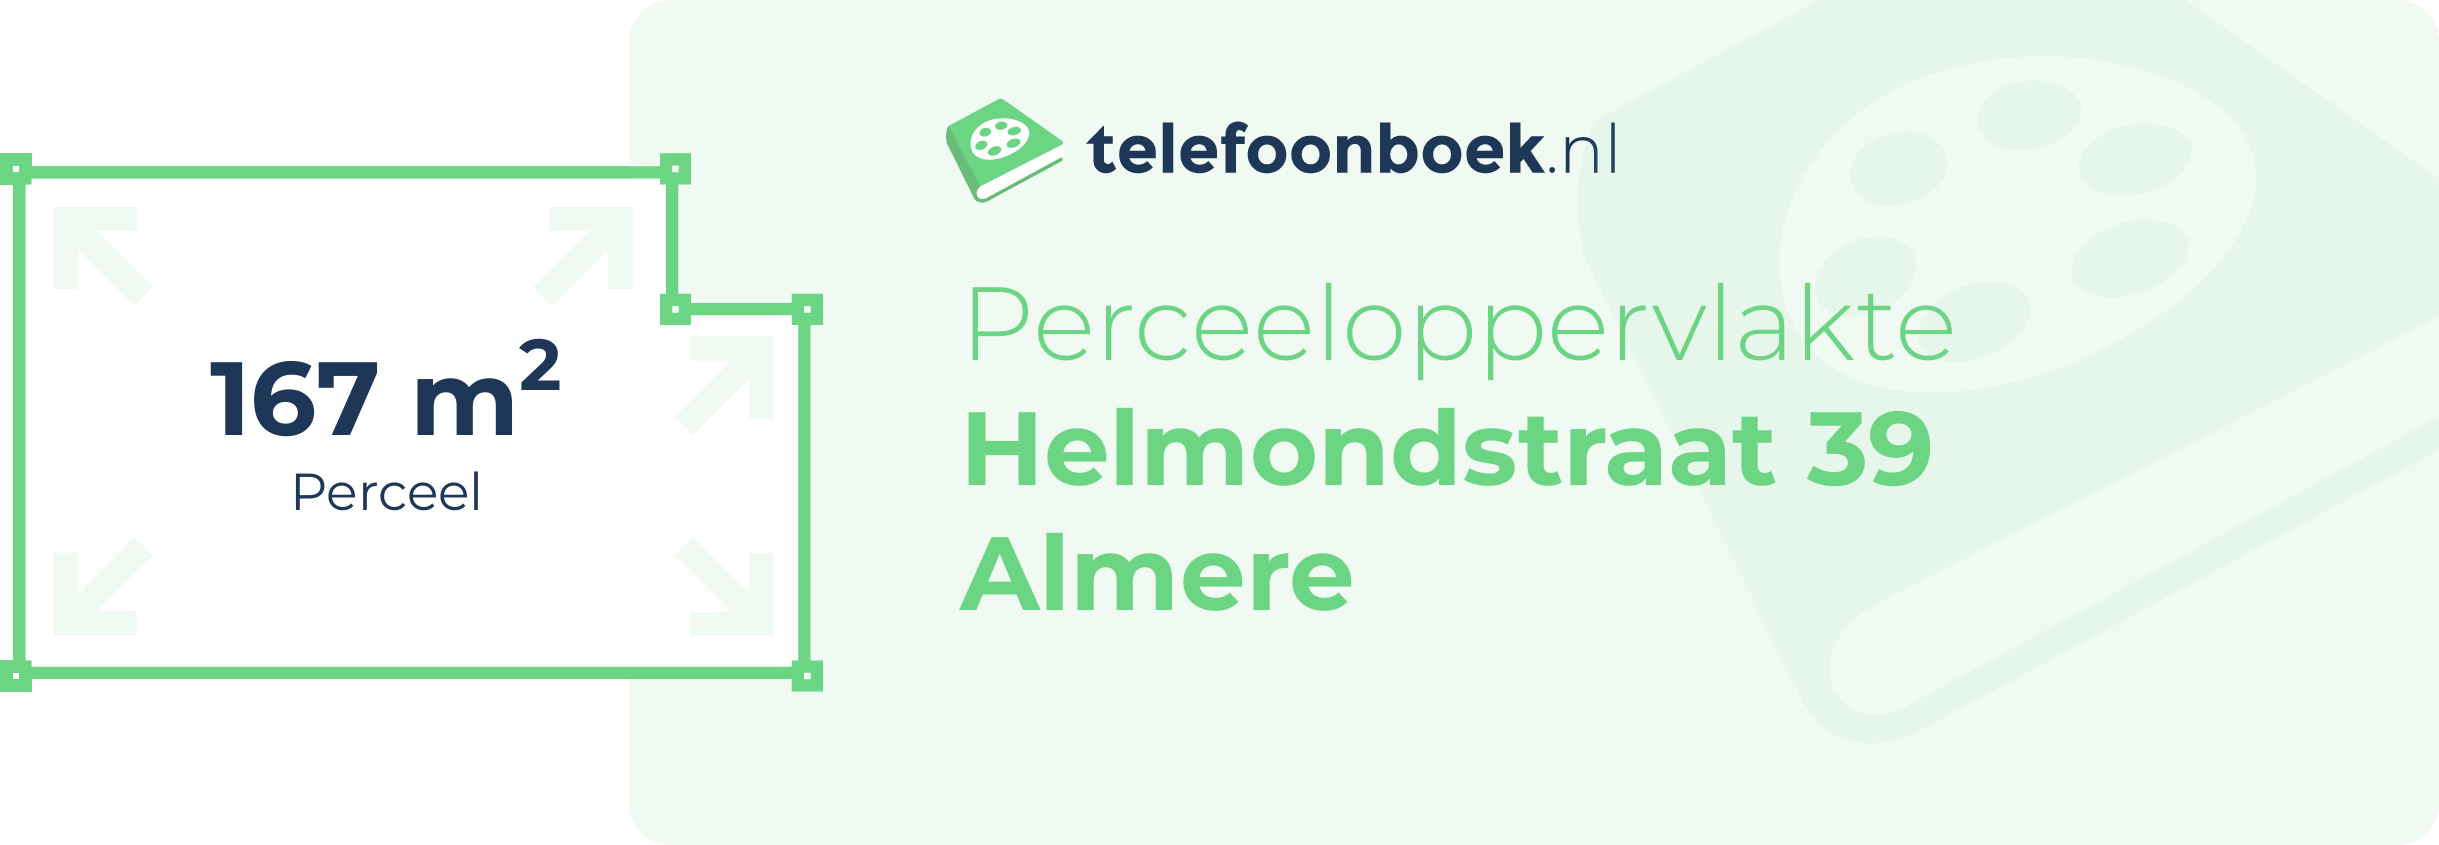 Perceeloppervlakte Helmondstraat 39 Almere